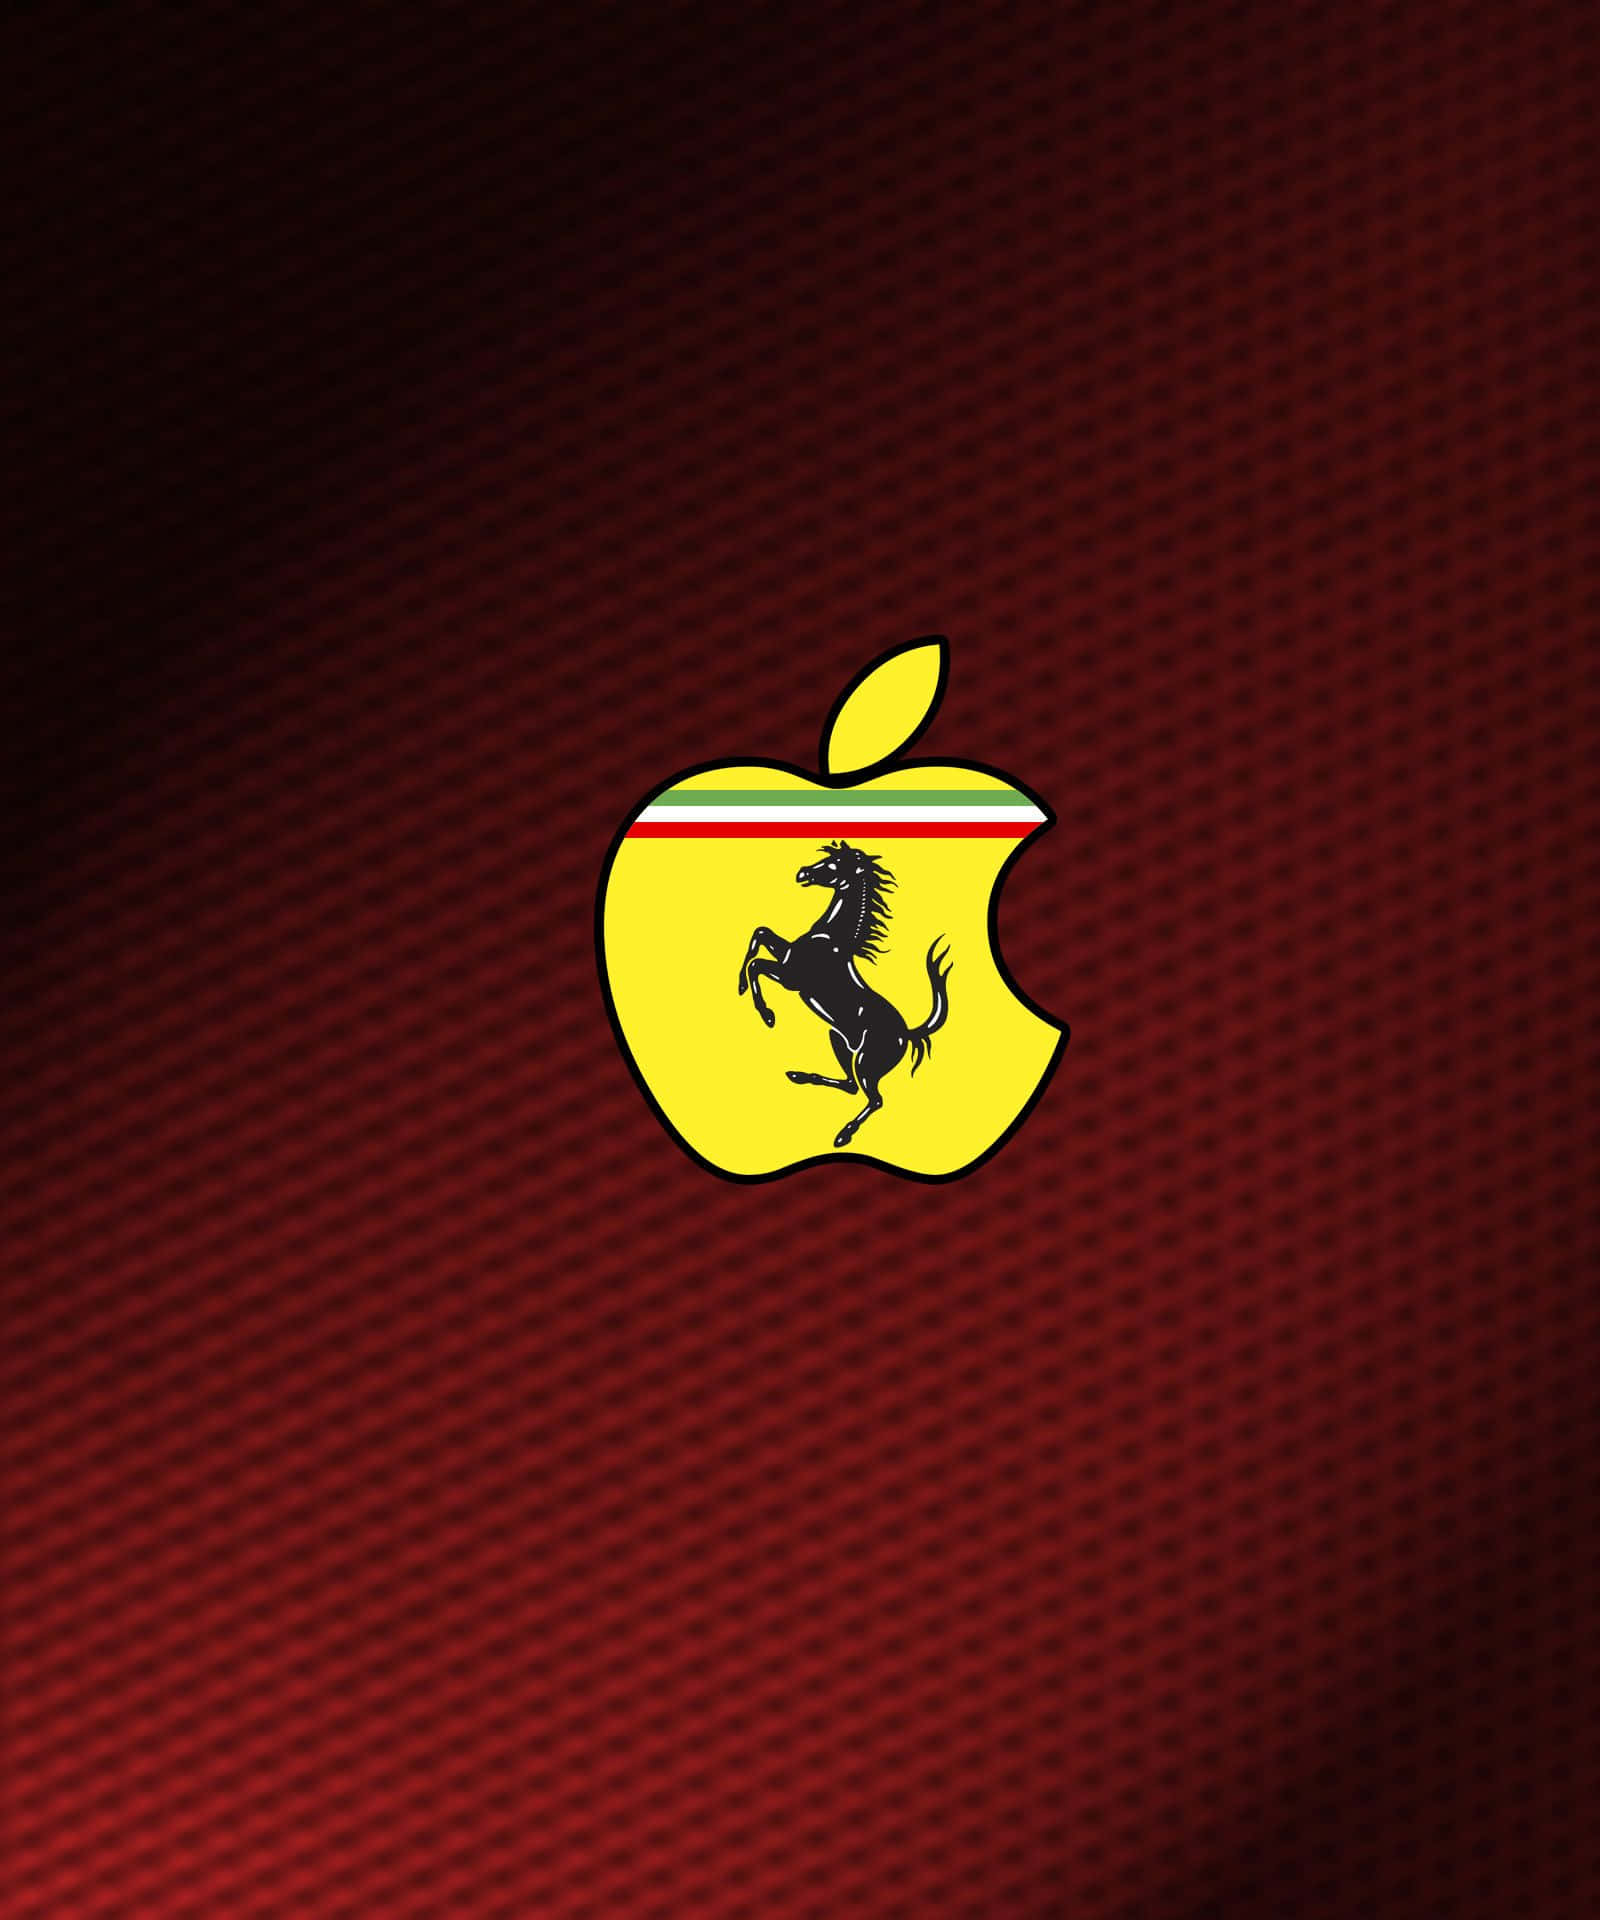 Cooleapple Ferrari-logo Wallpaper